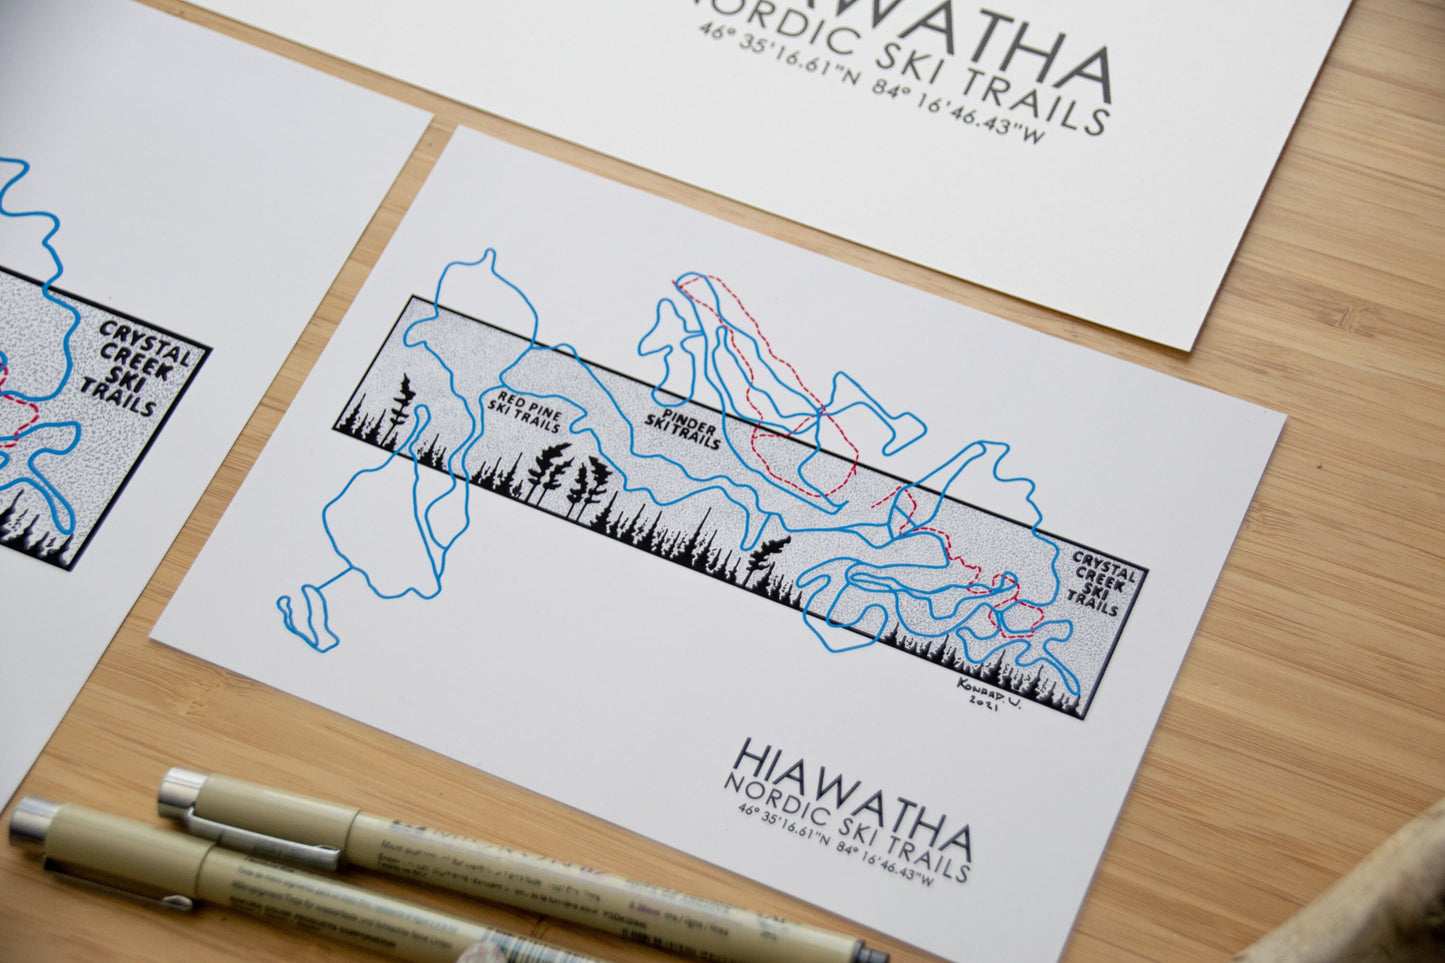 Hiawatha Nordic Ski Trail Map - Pen and Ink PRINT